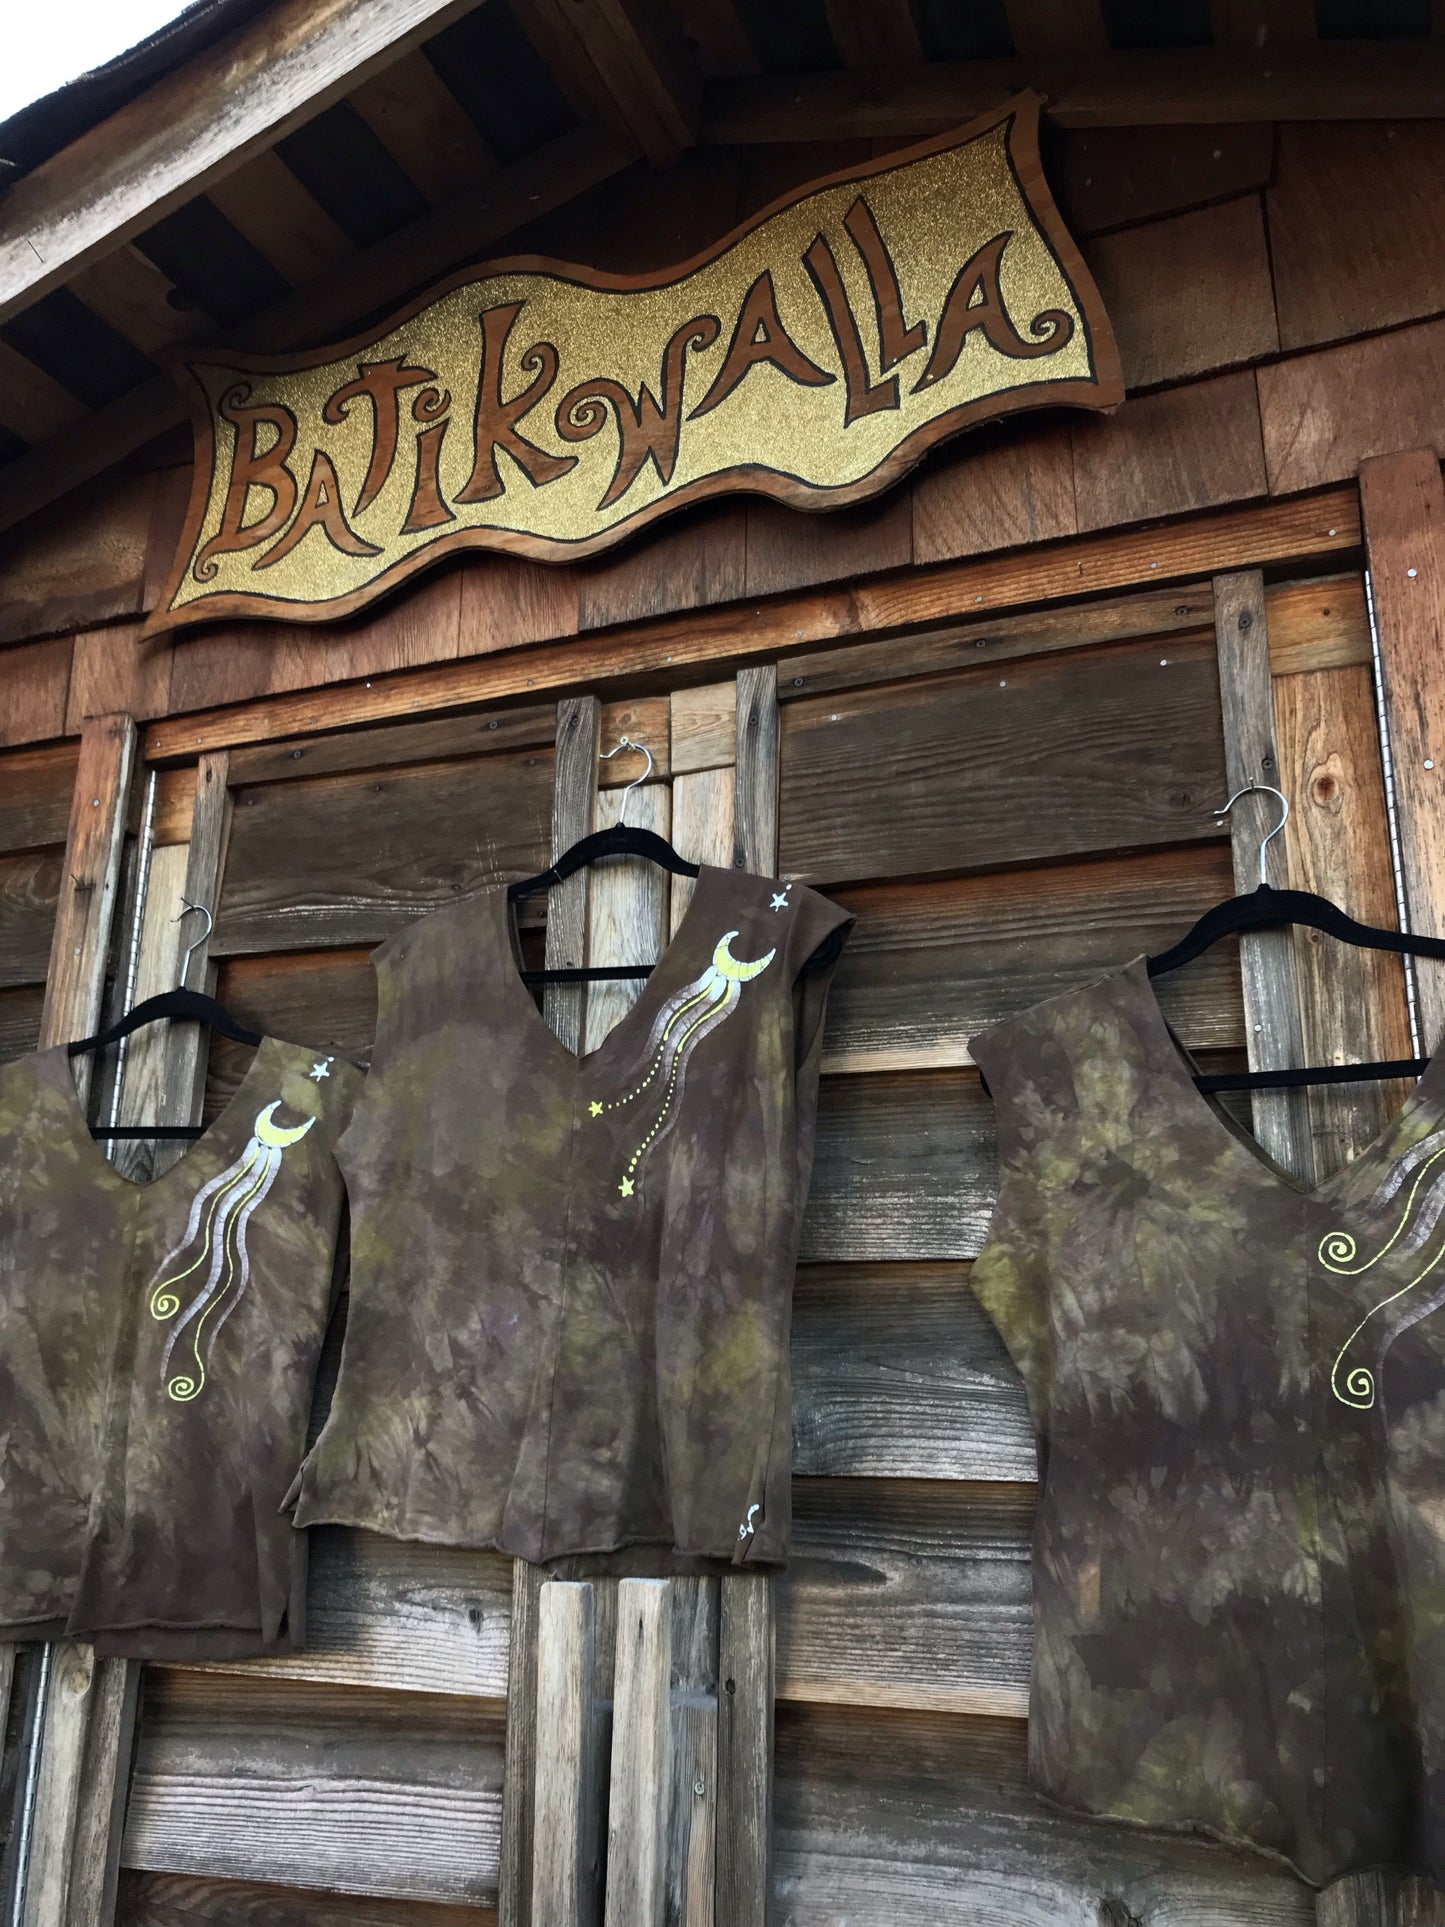 Earthbound - Organic Cotton 4 Panel Batik Top - Handmade Batik Dresses Batikwalla 